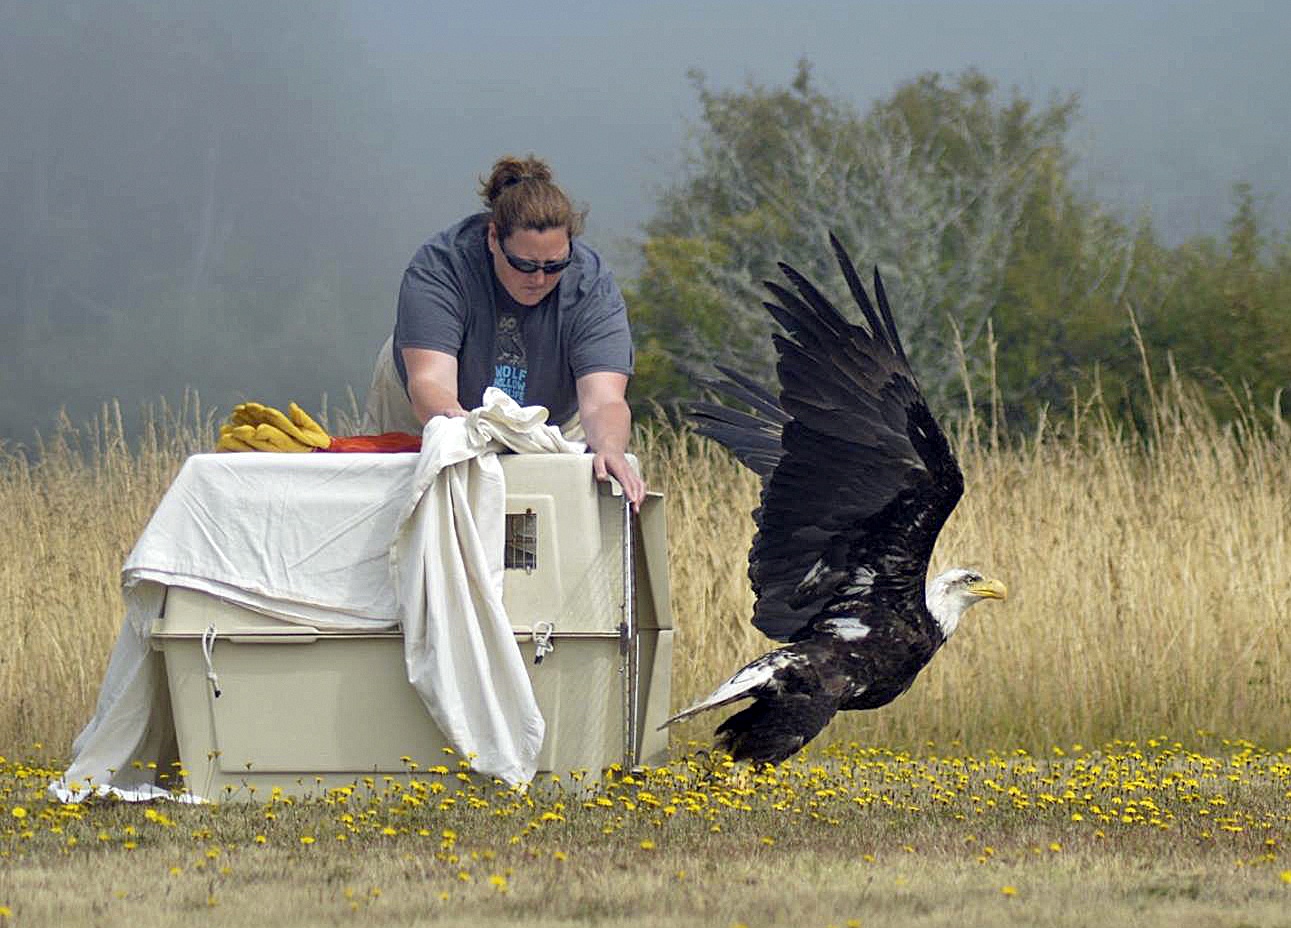 Penny Harner releasing the bald eagle